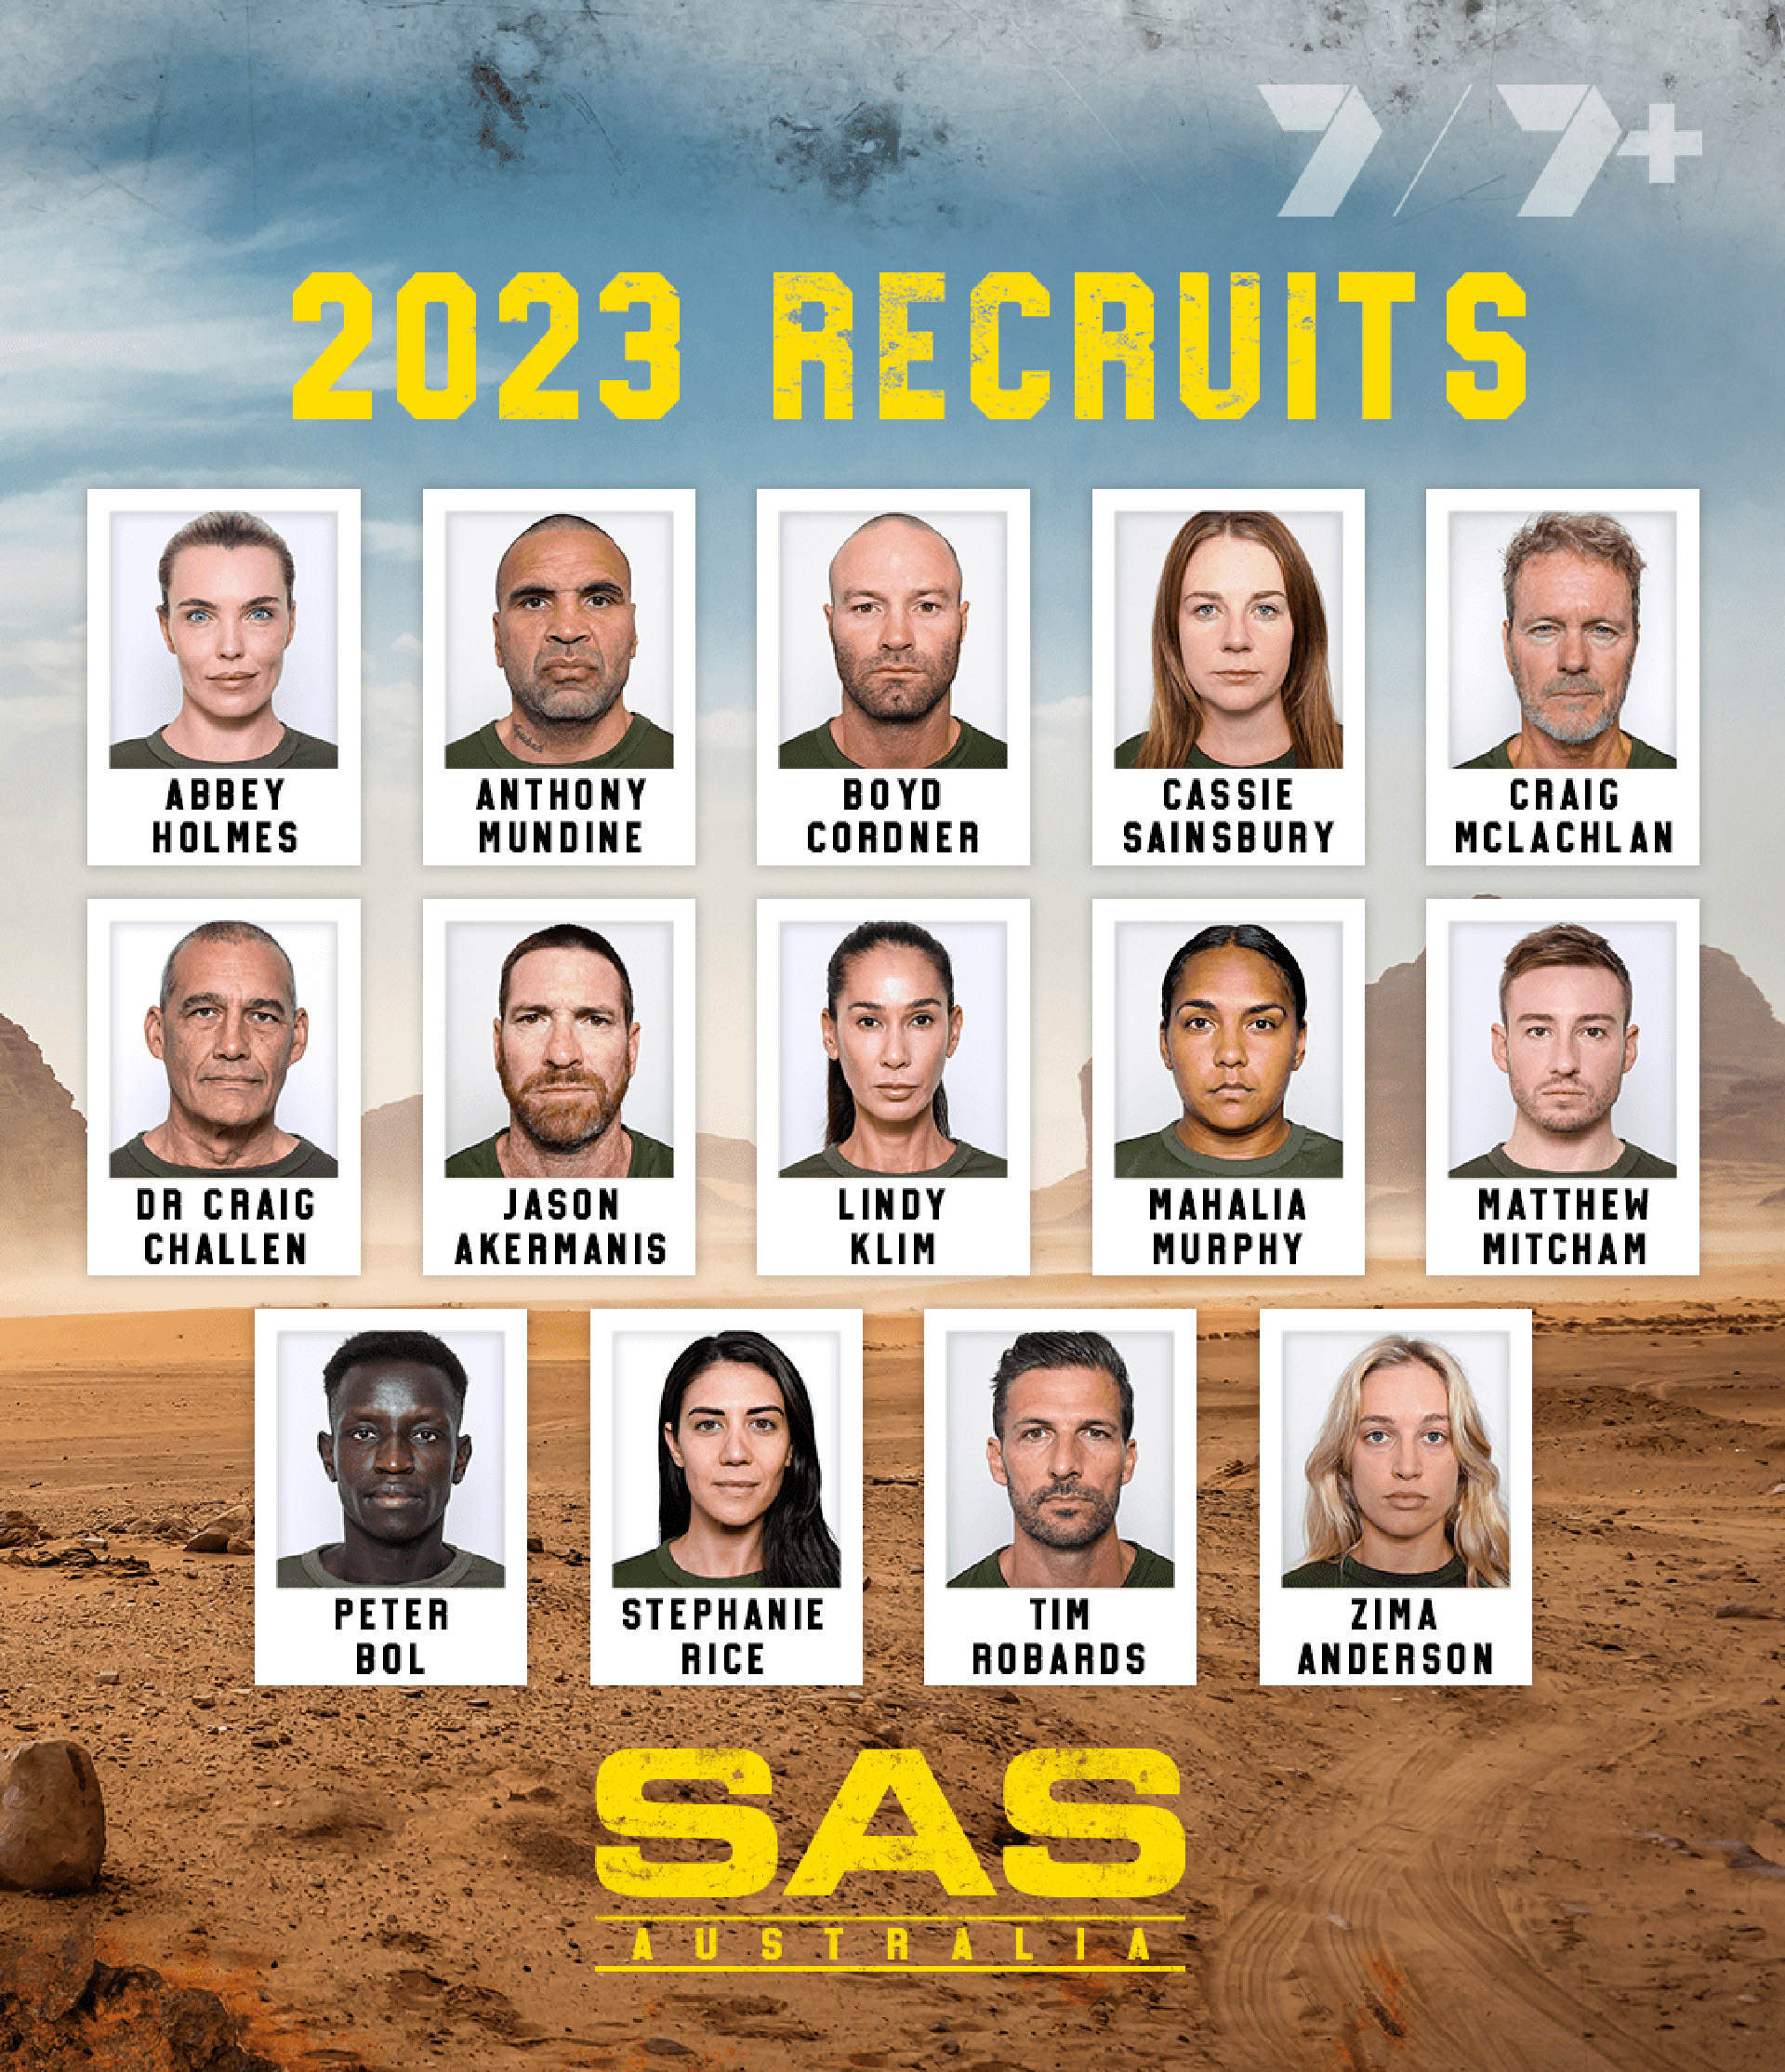 Craig McLachlan and the cast of SAS Australia 2023